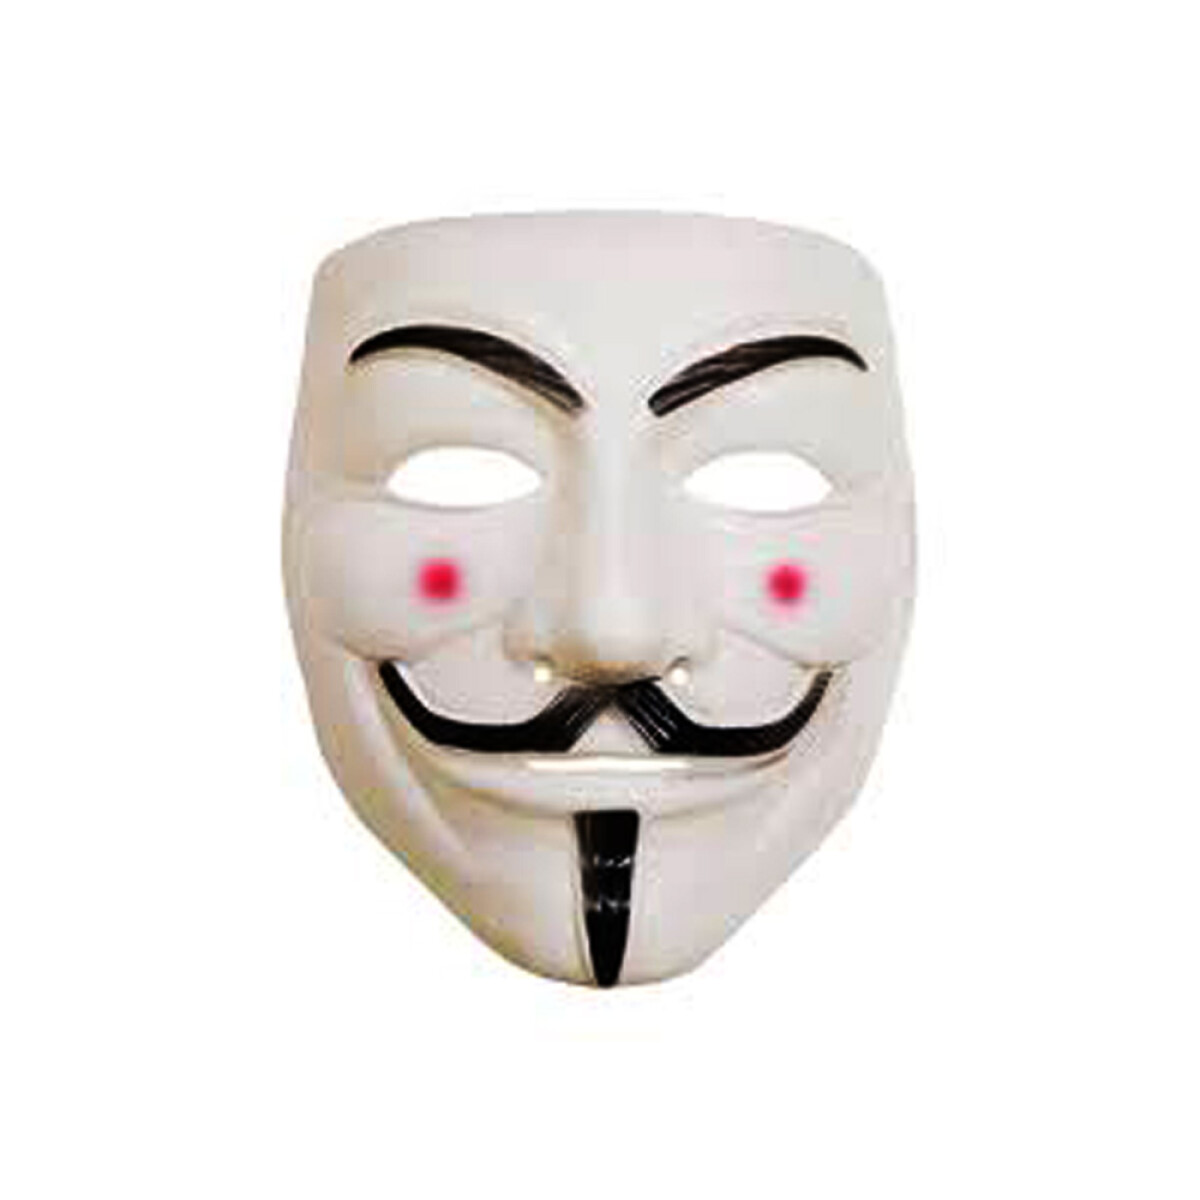 Mascara anonymous 